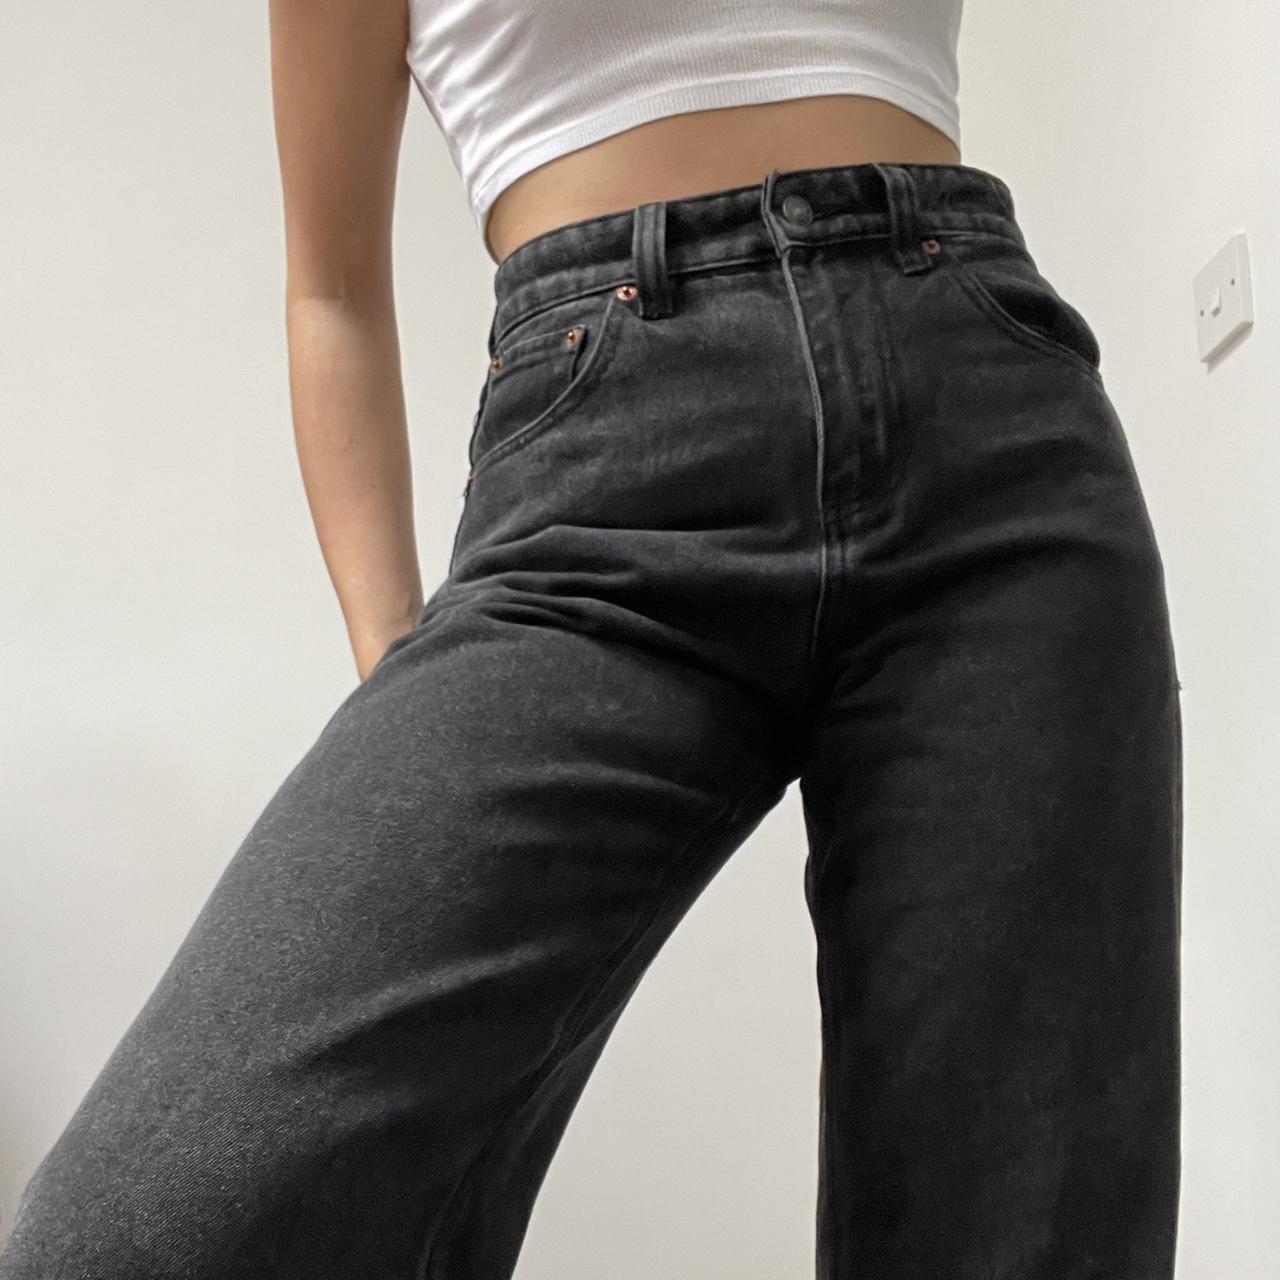 Motel parallel black jeans high waisted Size... - Depop